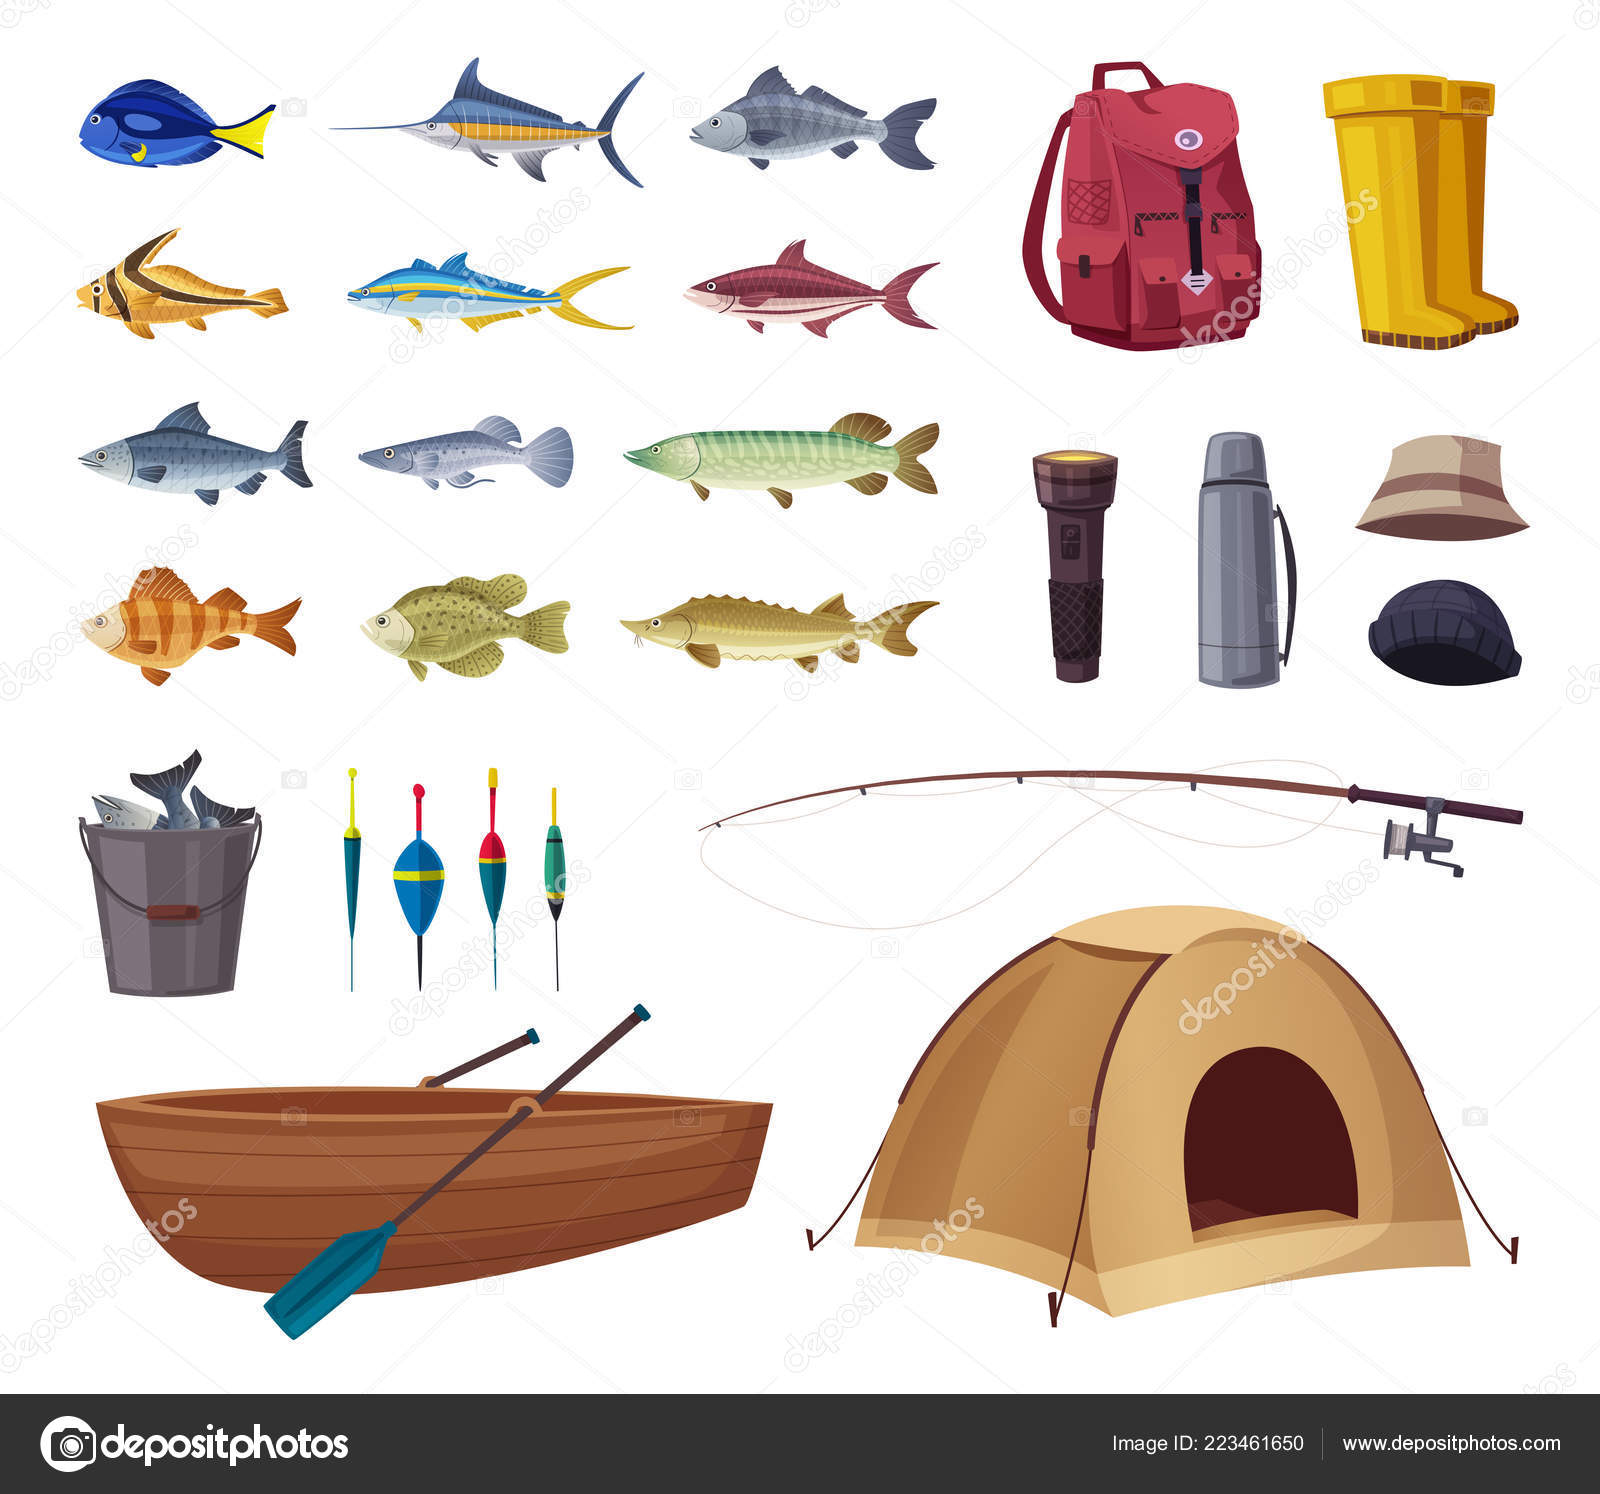 https://st4.depositphotos.com/4881653/22346/v/1600/depositphotos_223461650-stock-illustration-fishing-equipment-set-of-icons.jpg